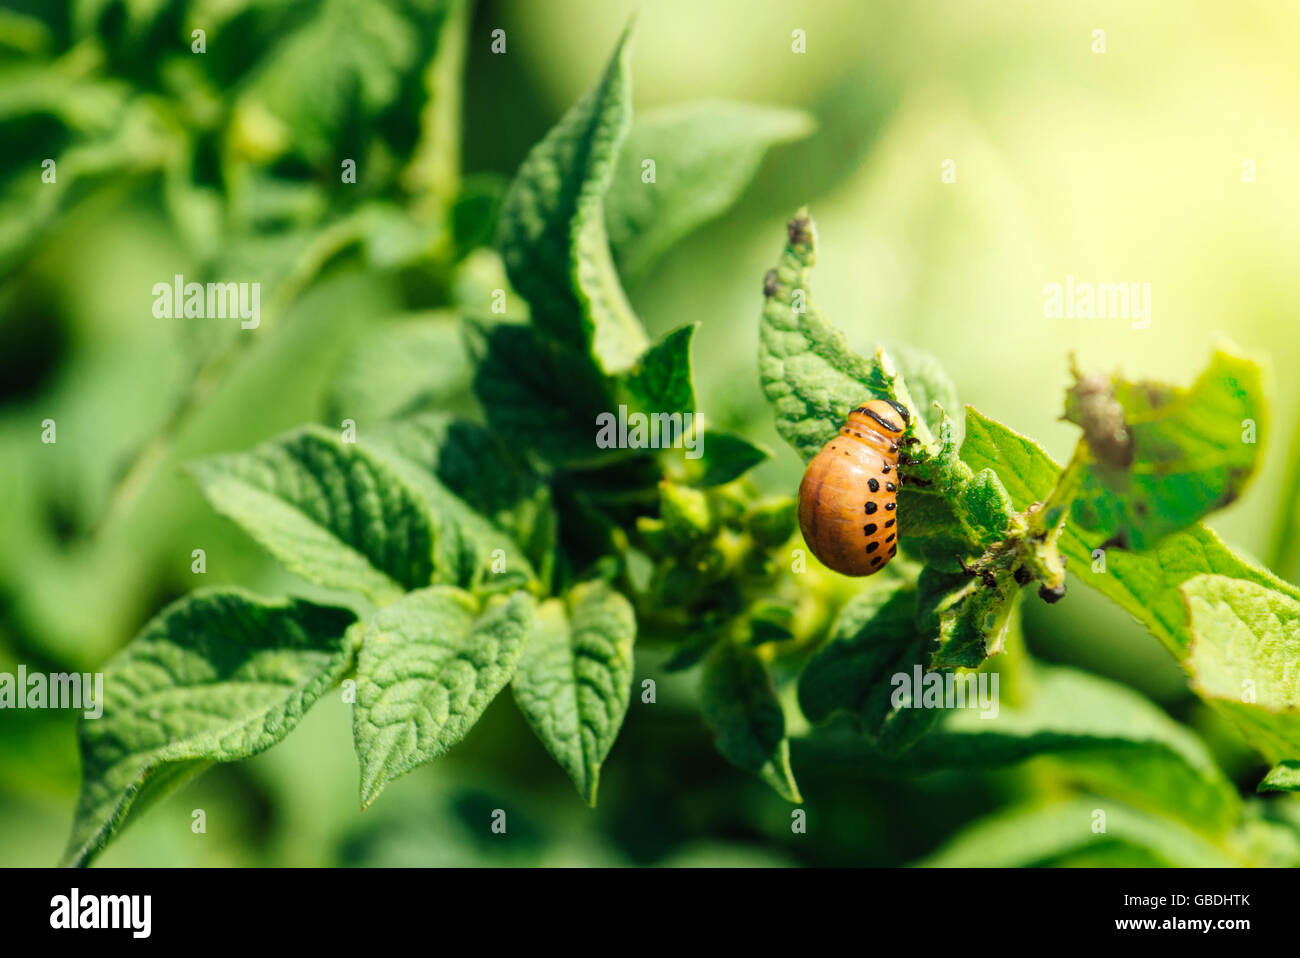 Potato bug larvae feeding on a plant leaf in vegetable garden, selective focus Stock Photo